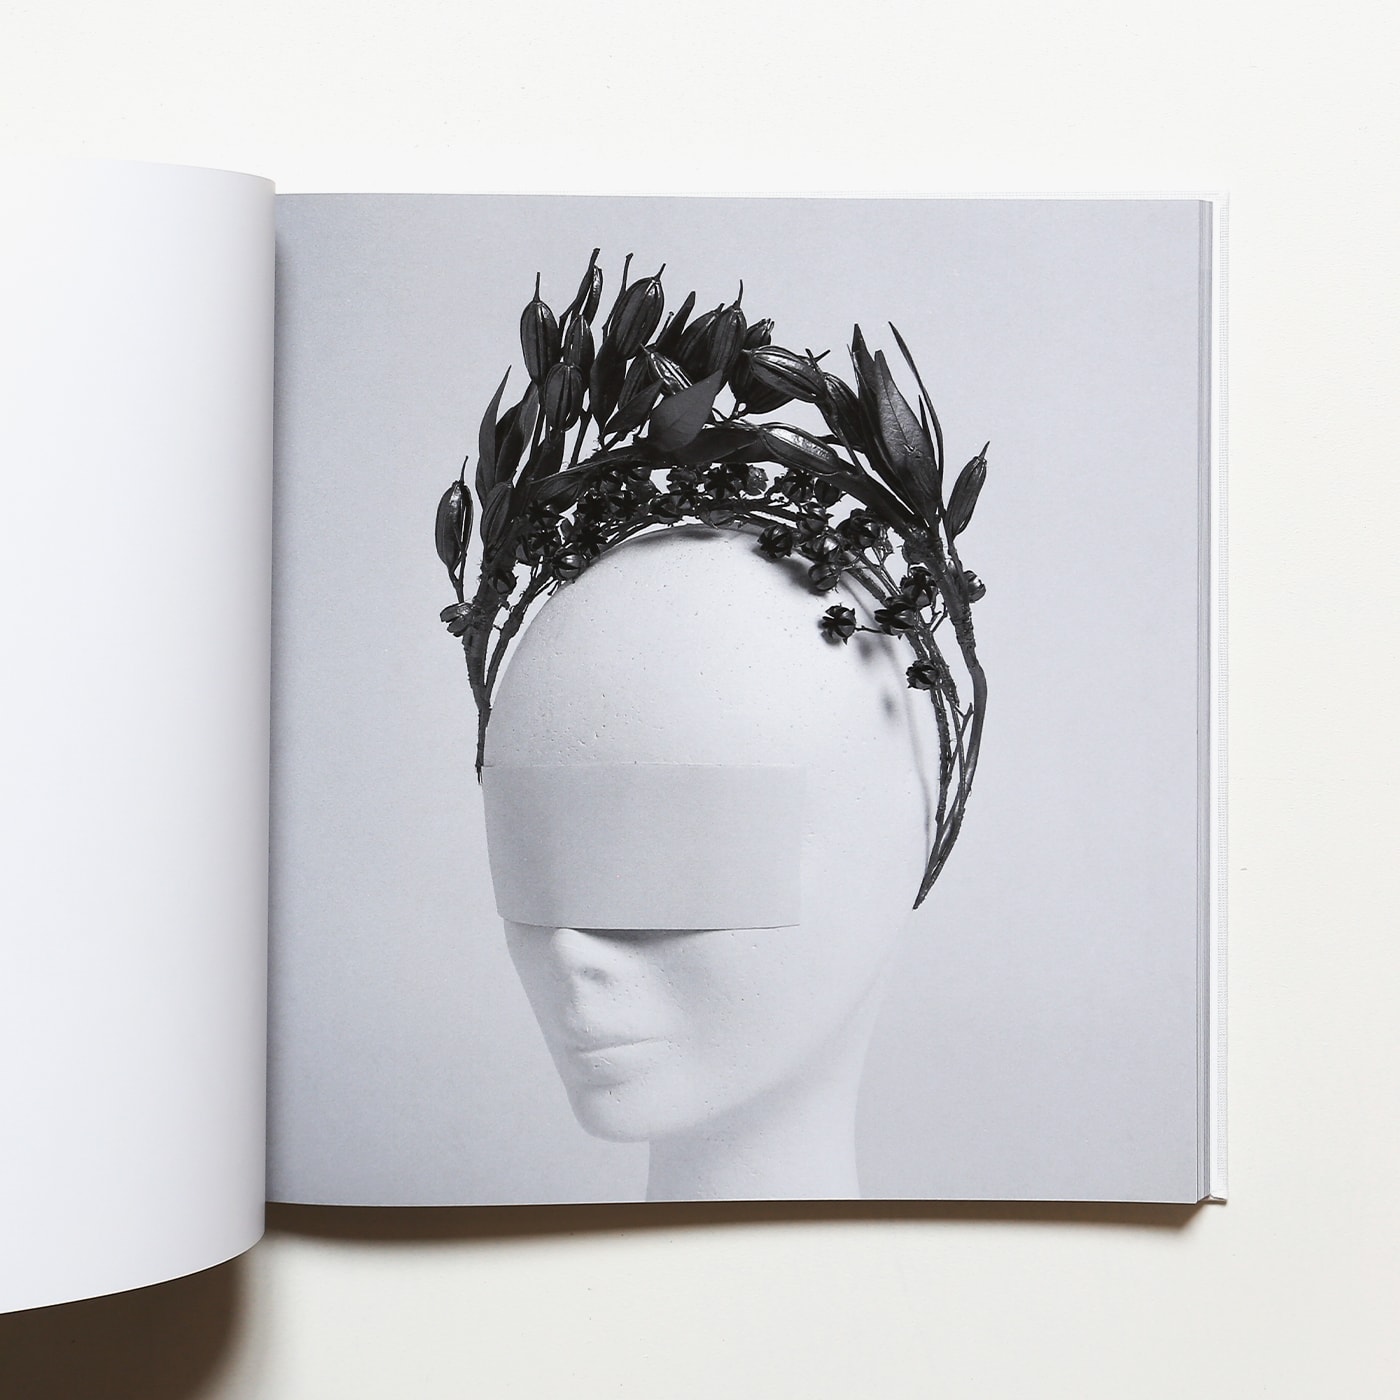 Kamo Head - Katsuya KAMO  shashasha - Photography & art in books